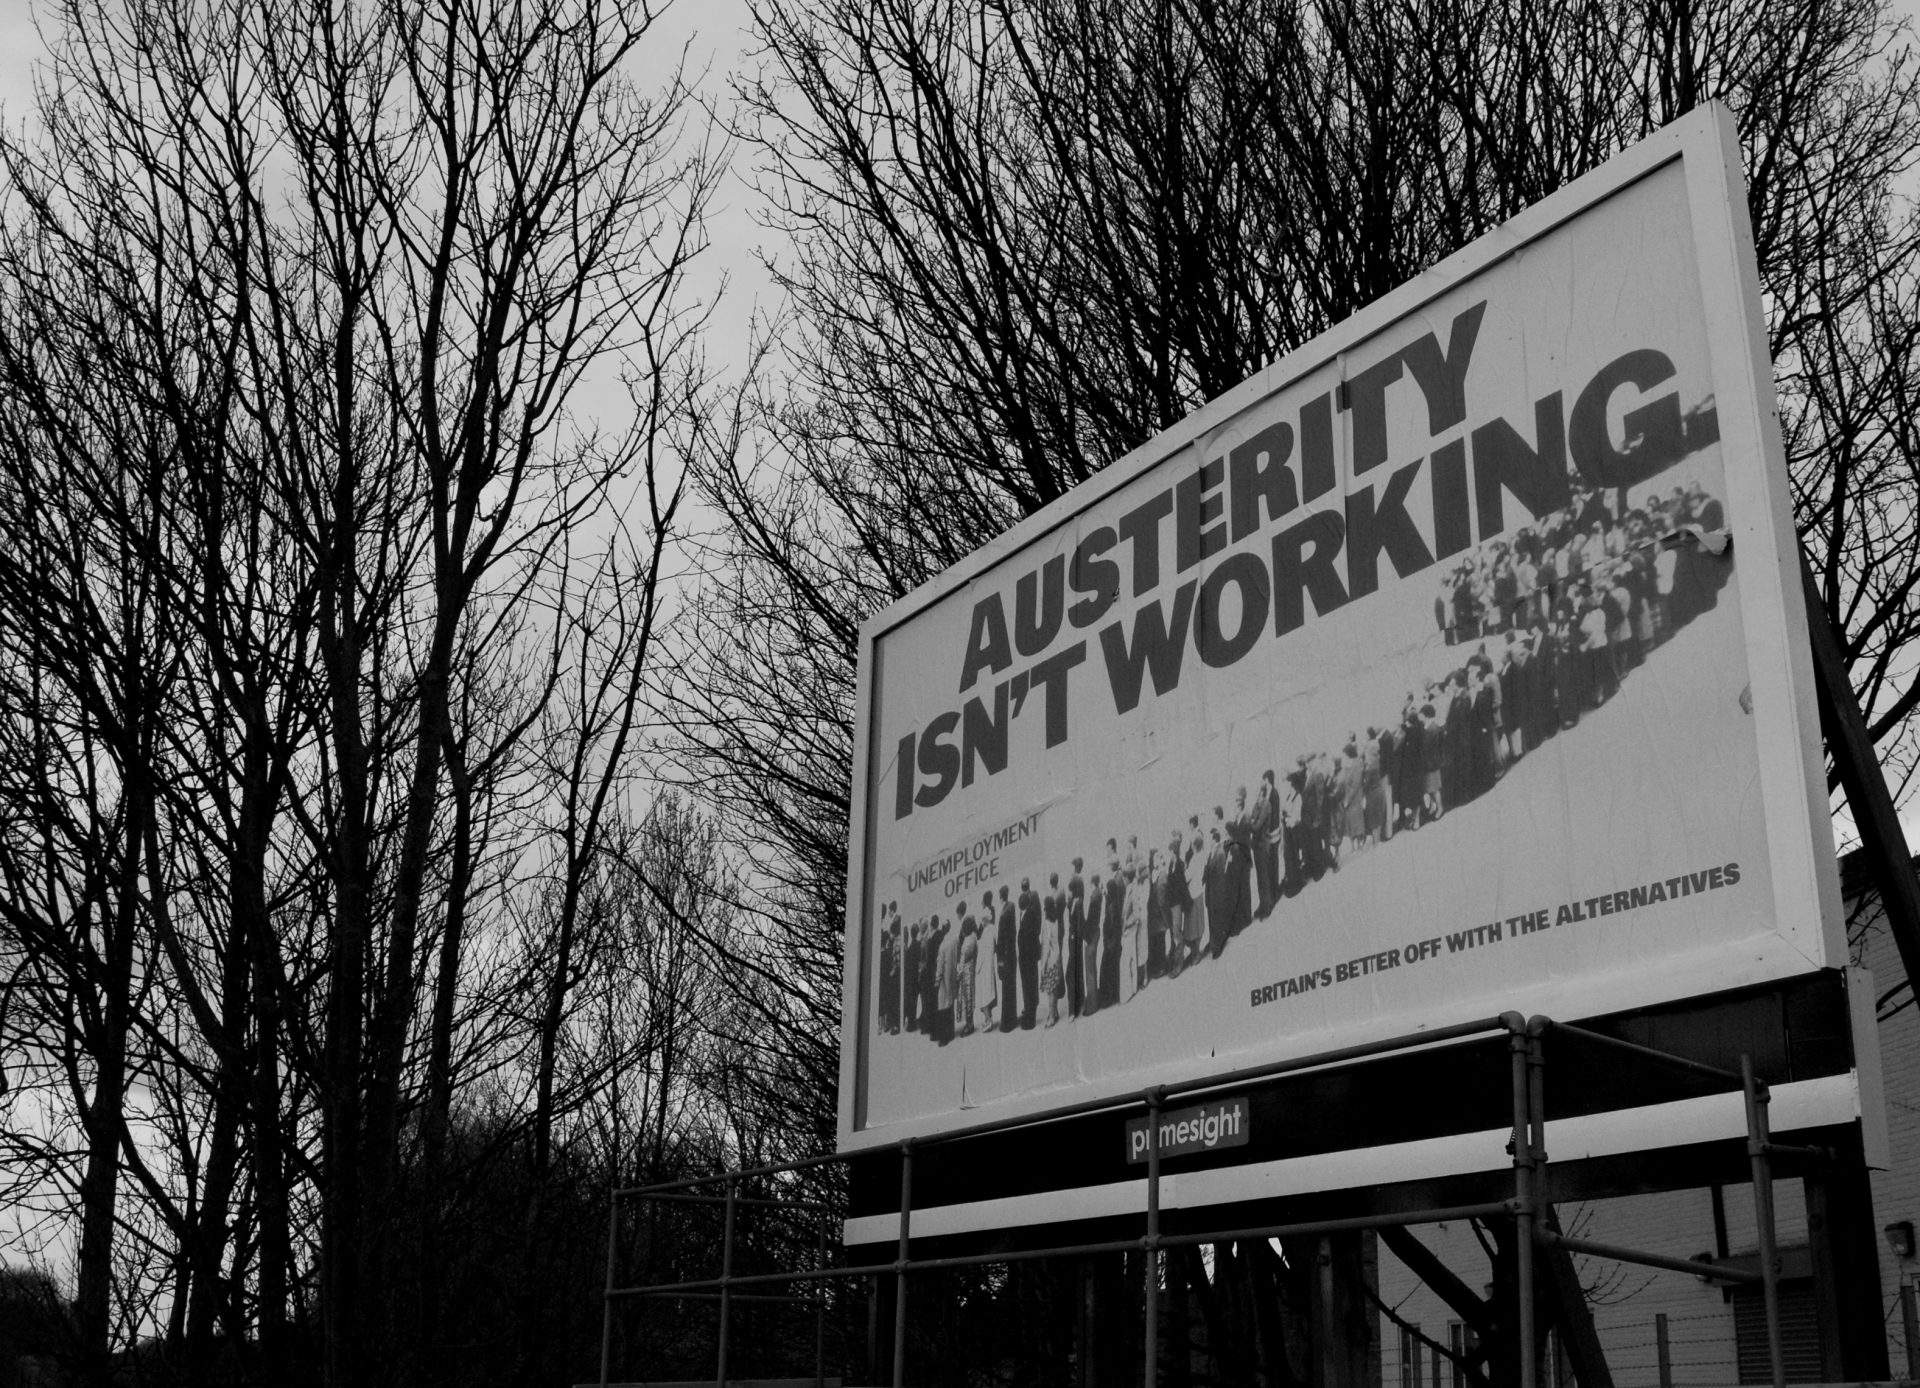 Austerity isn't working poster. Credit: Flickr/Wandererwandering